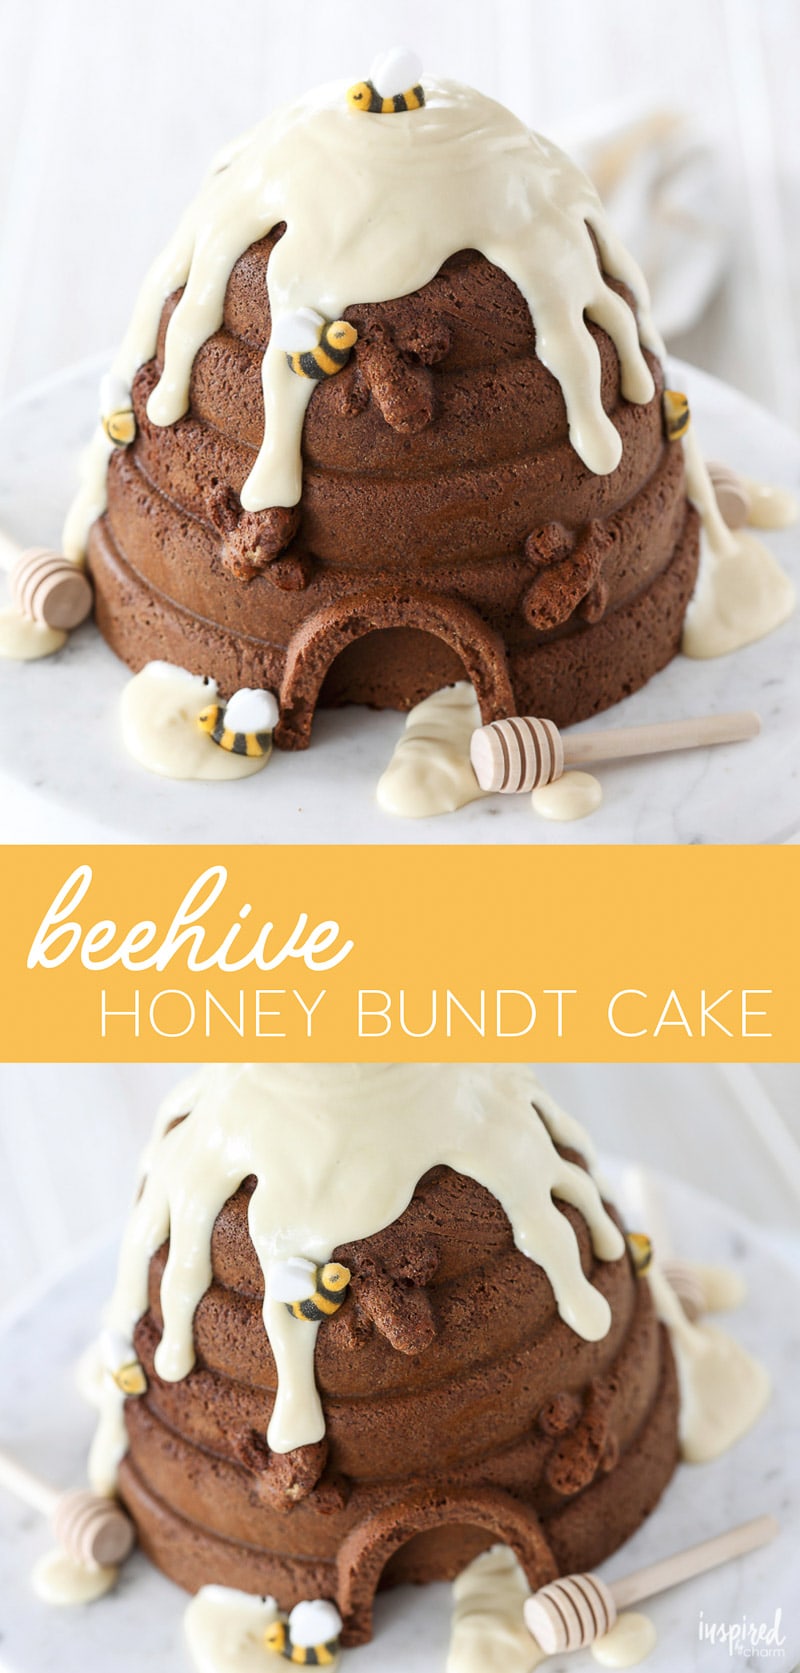 This Beehive Honey Bundt Cake is as delicious as it is beautiful! #dessert #recipe #honey #bundt #cake #beehive